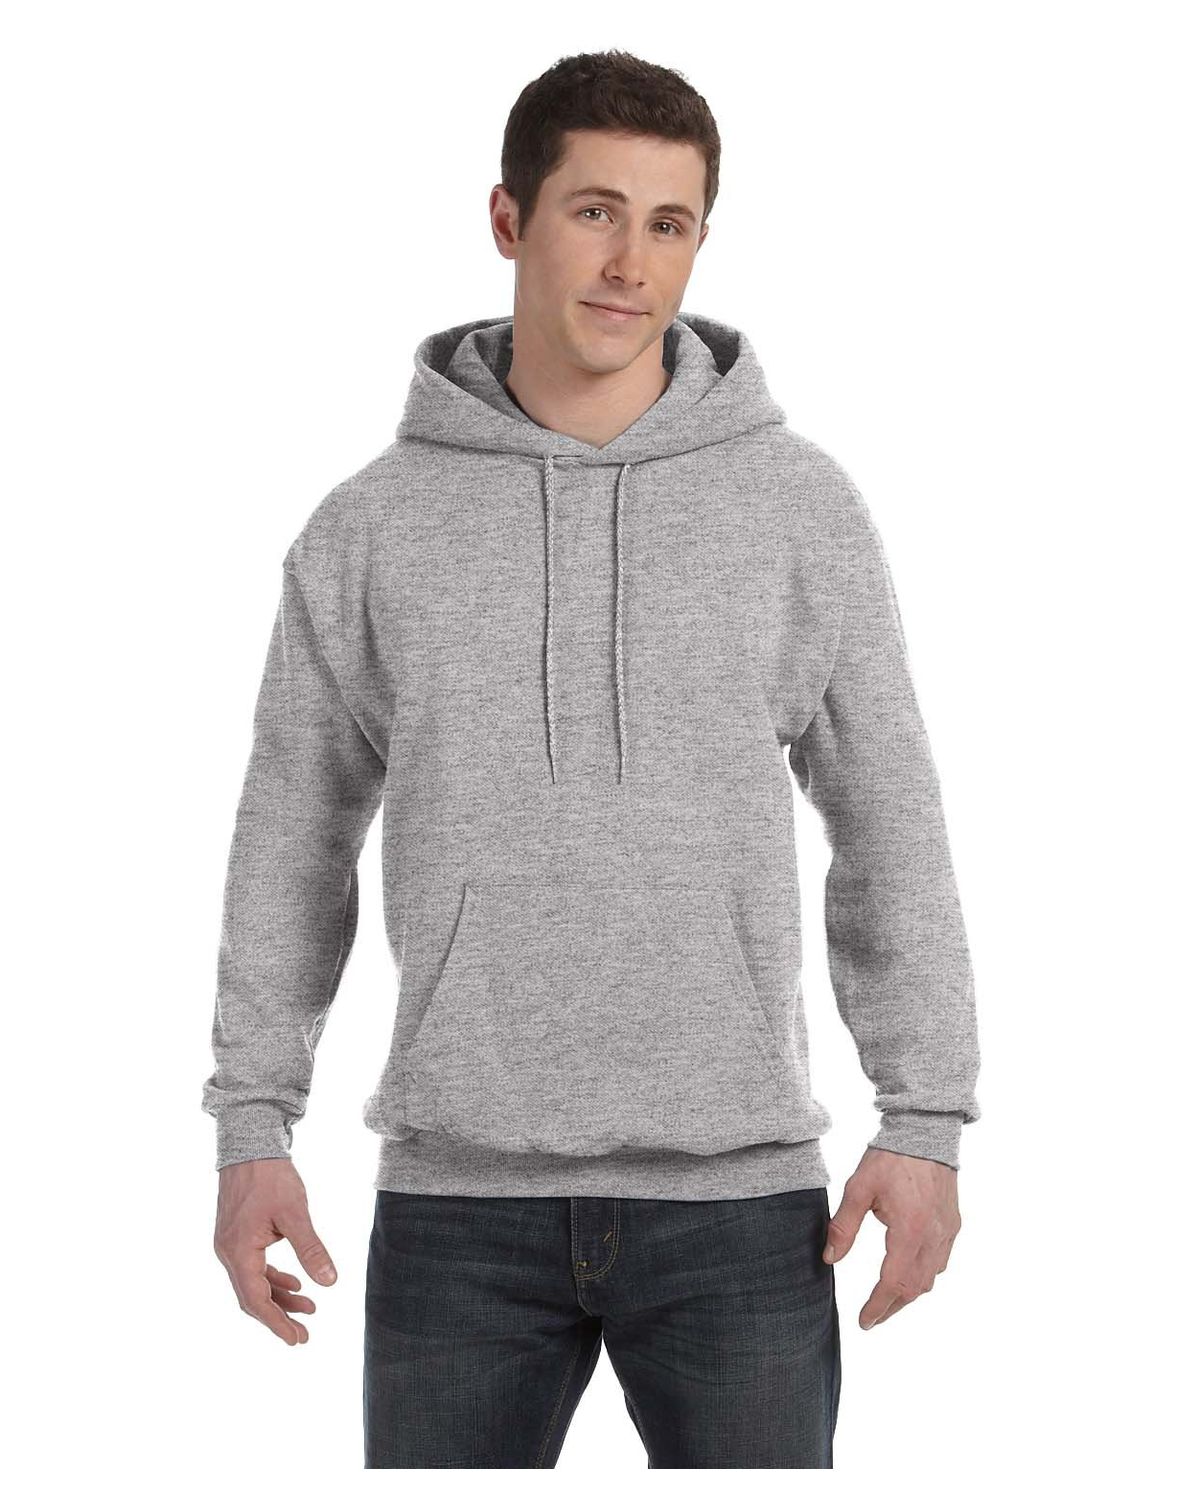 Hanes P170 Unisex Ecosmart Pullover Hooded Sweatshirt, 49% OFF